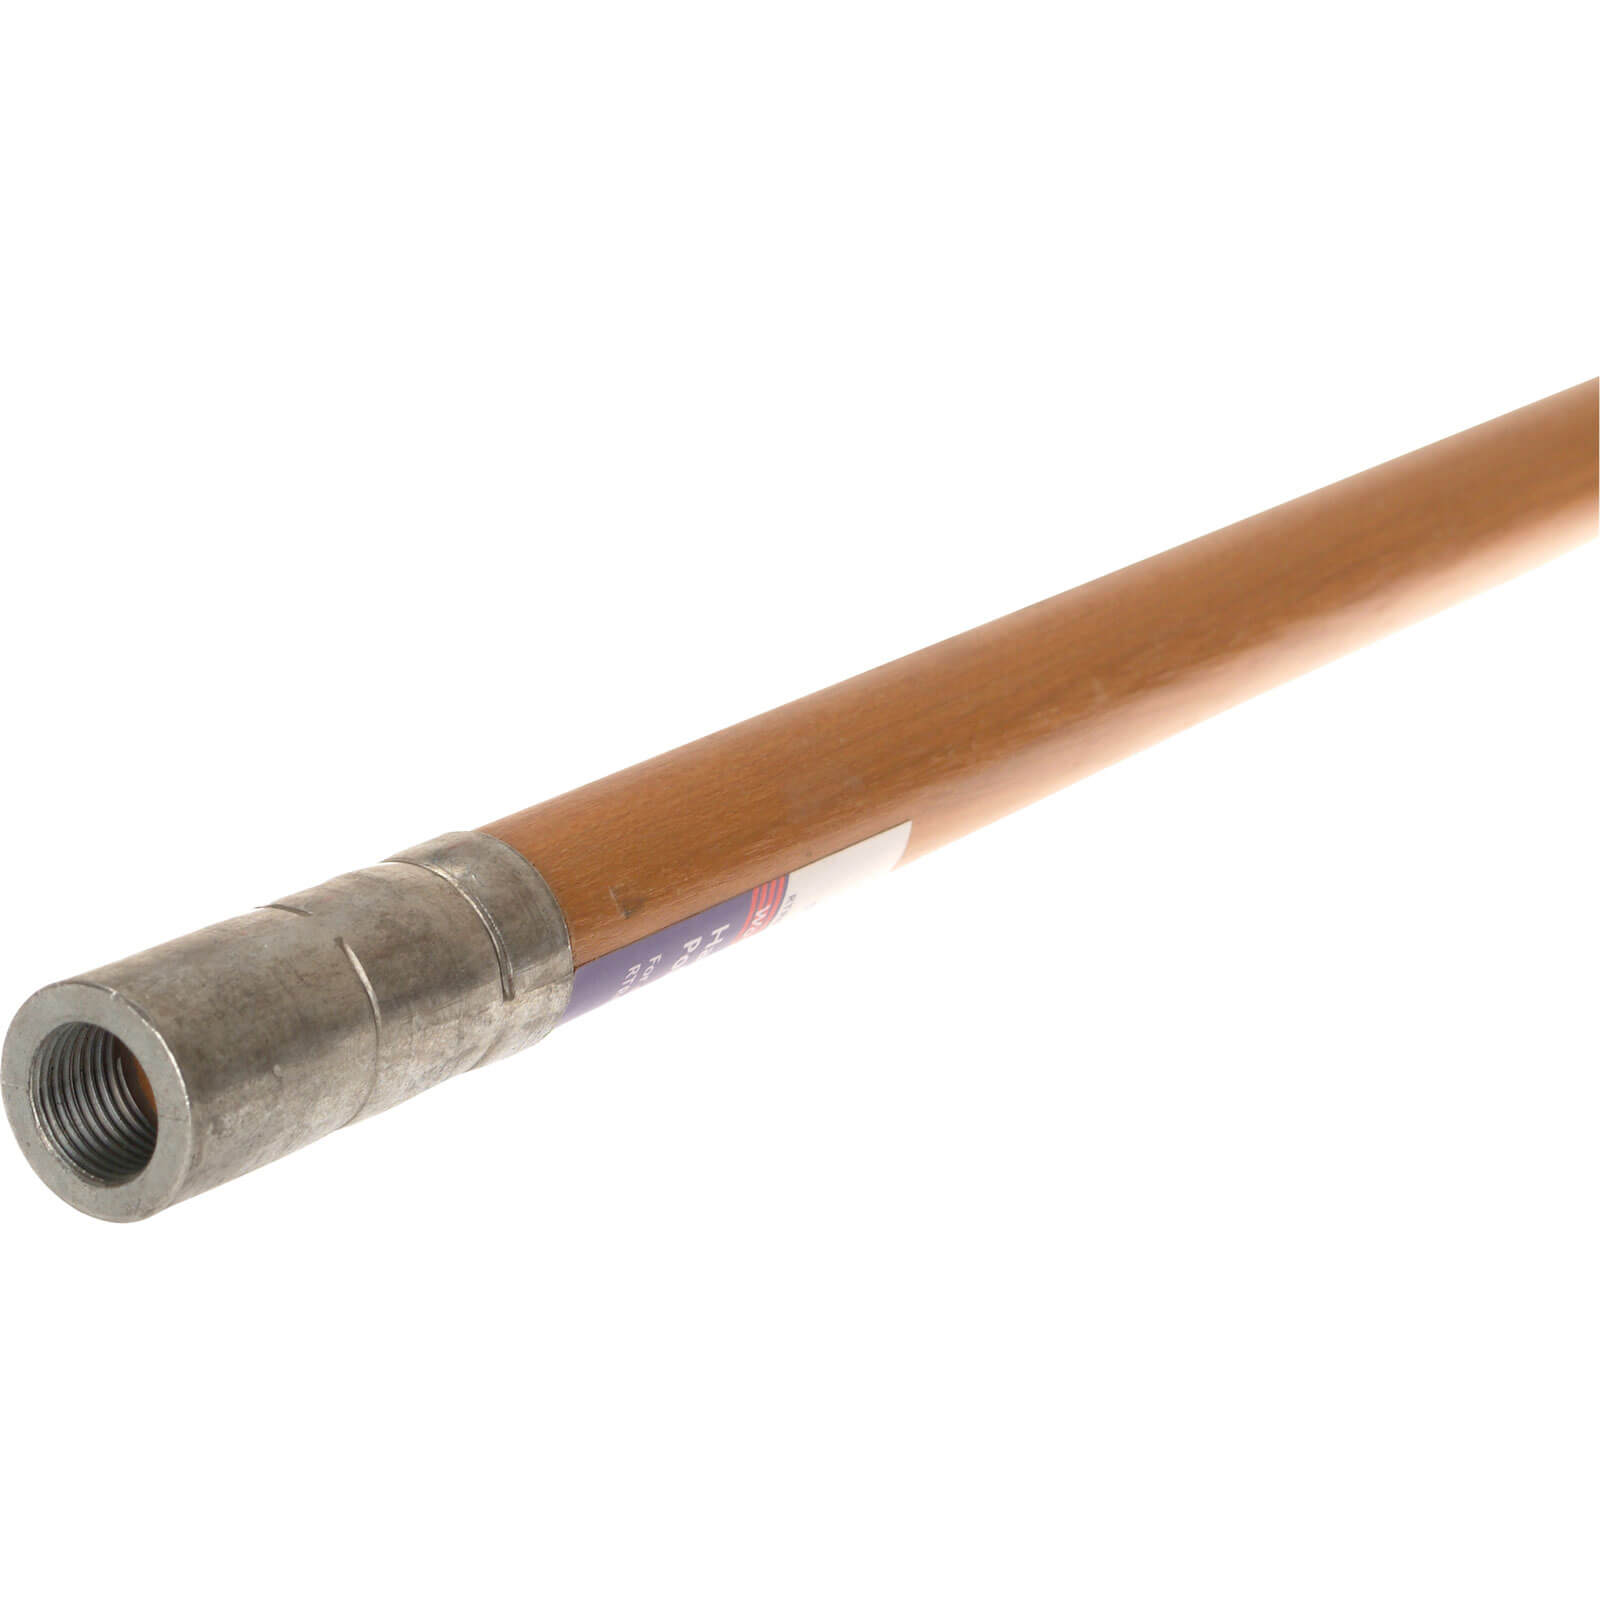 Image of RST Spare Wooden Handle For Pole Sander 1.2m